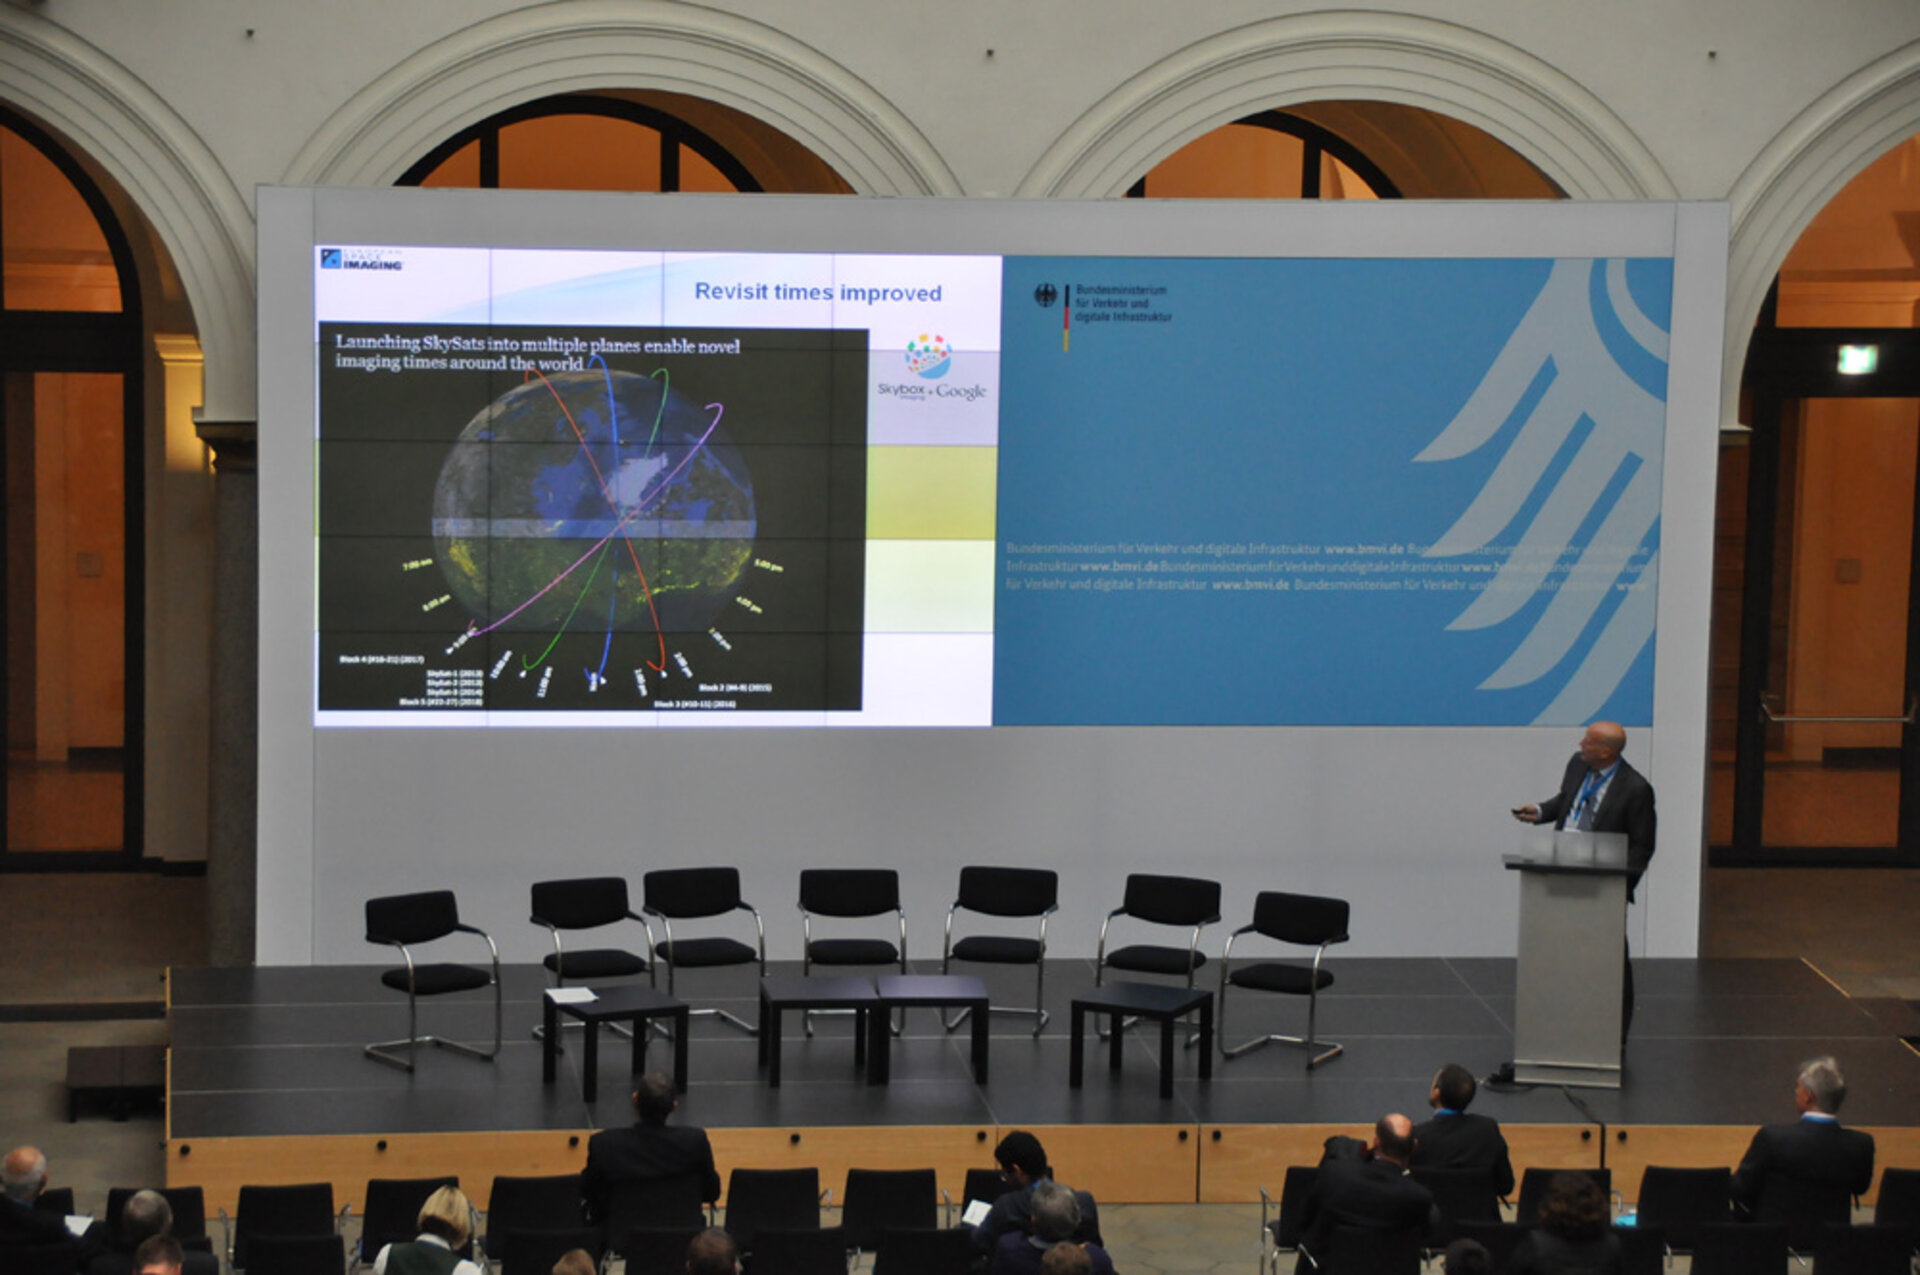 Die Satellite Masters Conference 2014 fand in Berlin statt